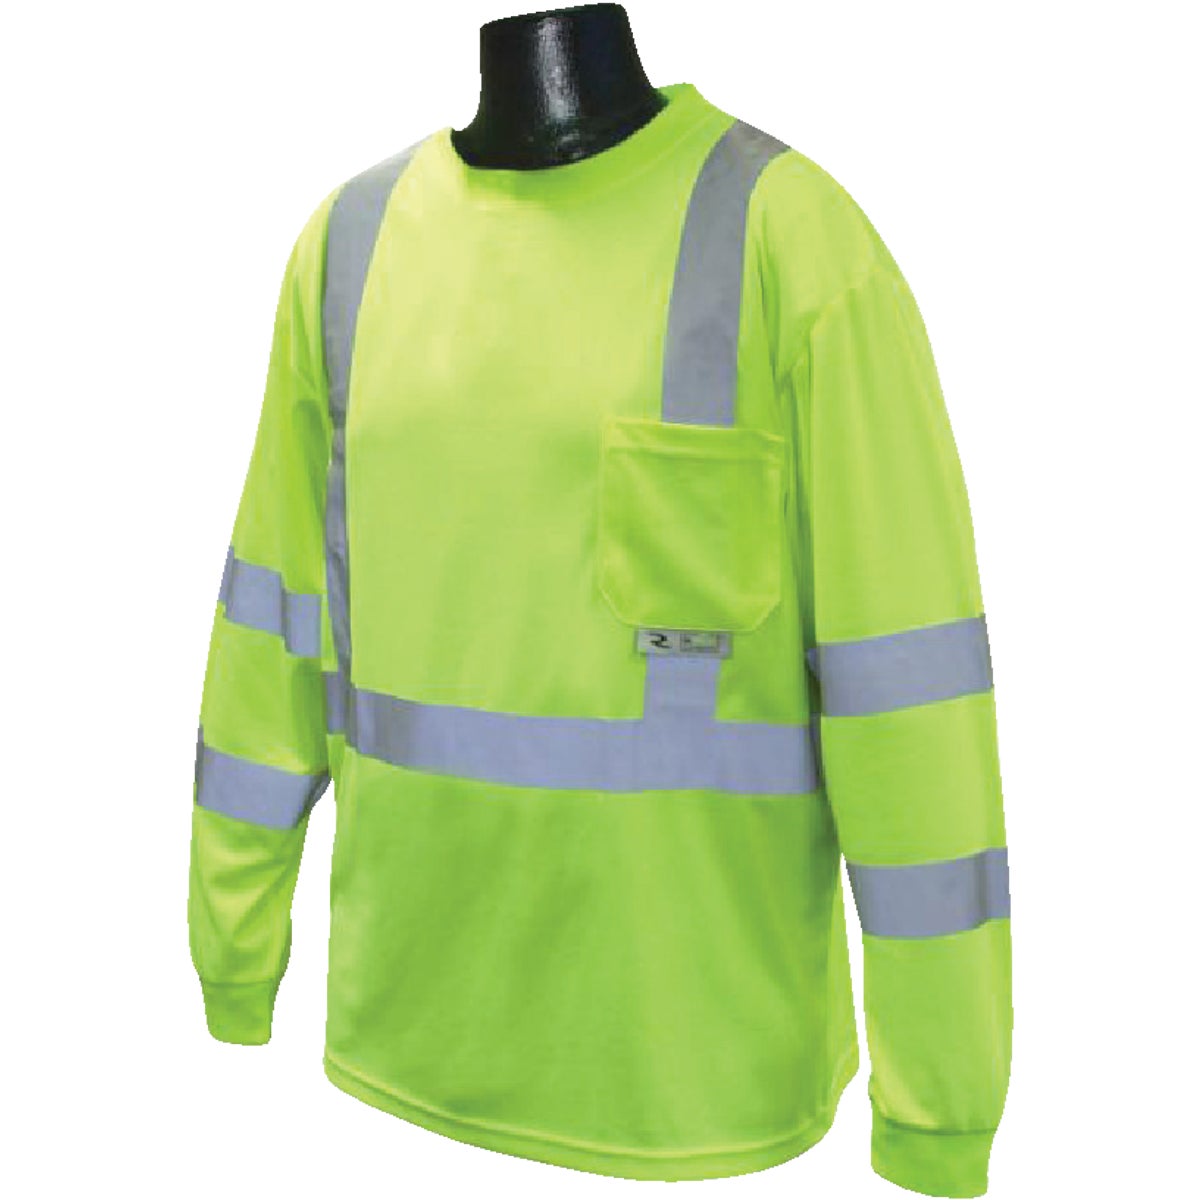 Radians Rad Wear ANSI Class 3 Hi Vis Green Safety T-Shirt XL